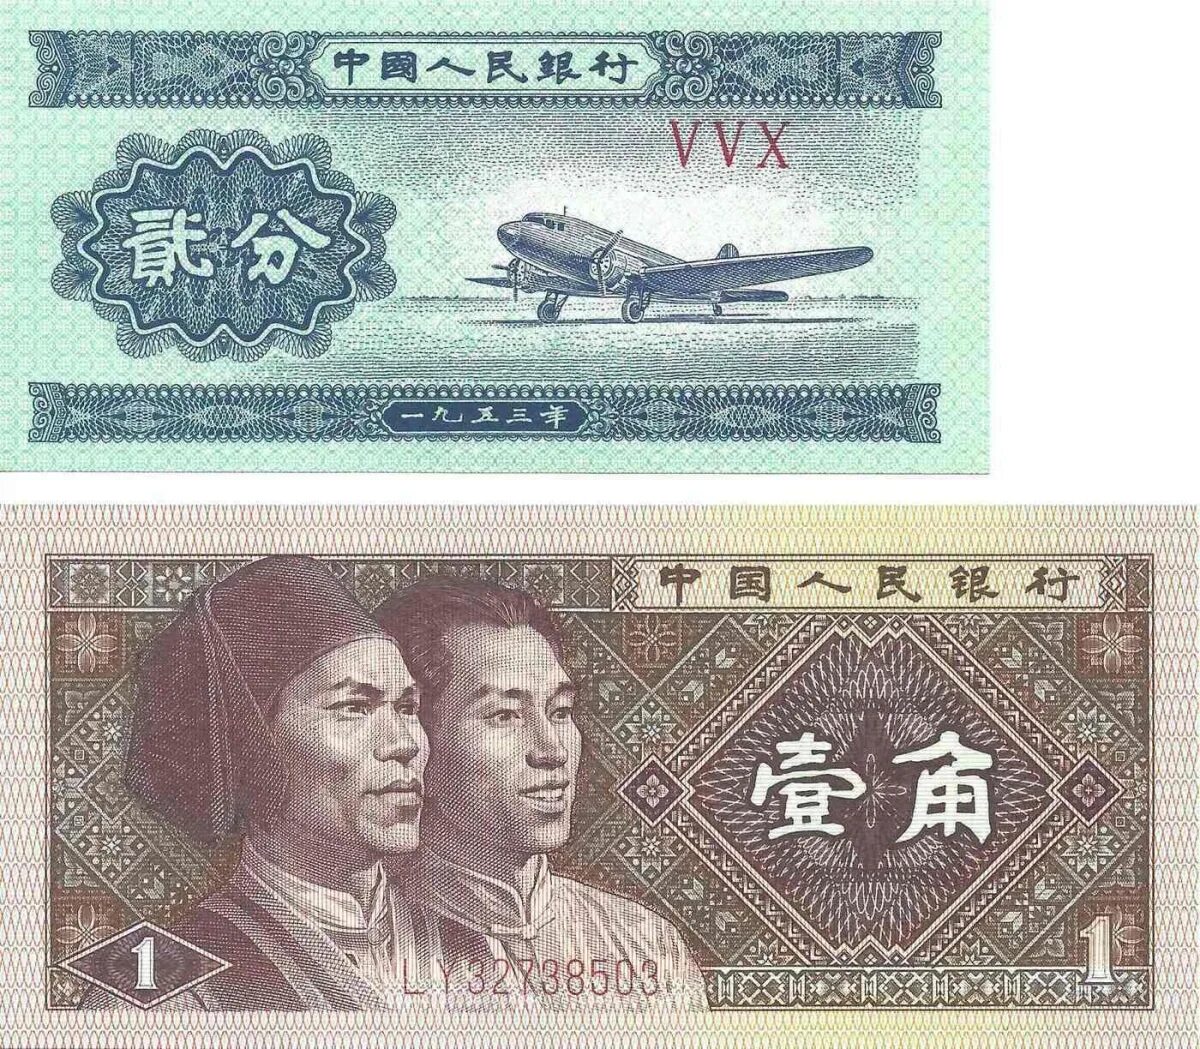 Китай 1 юань. Китайская банкнота 1 юань. Валюта Китая юань Дзяо. Китай 1 юань Китай банкнота.